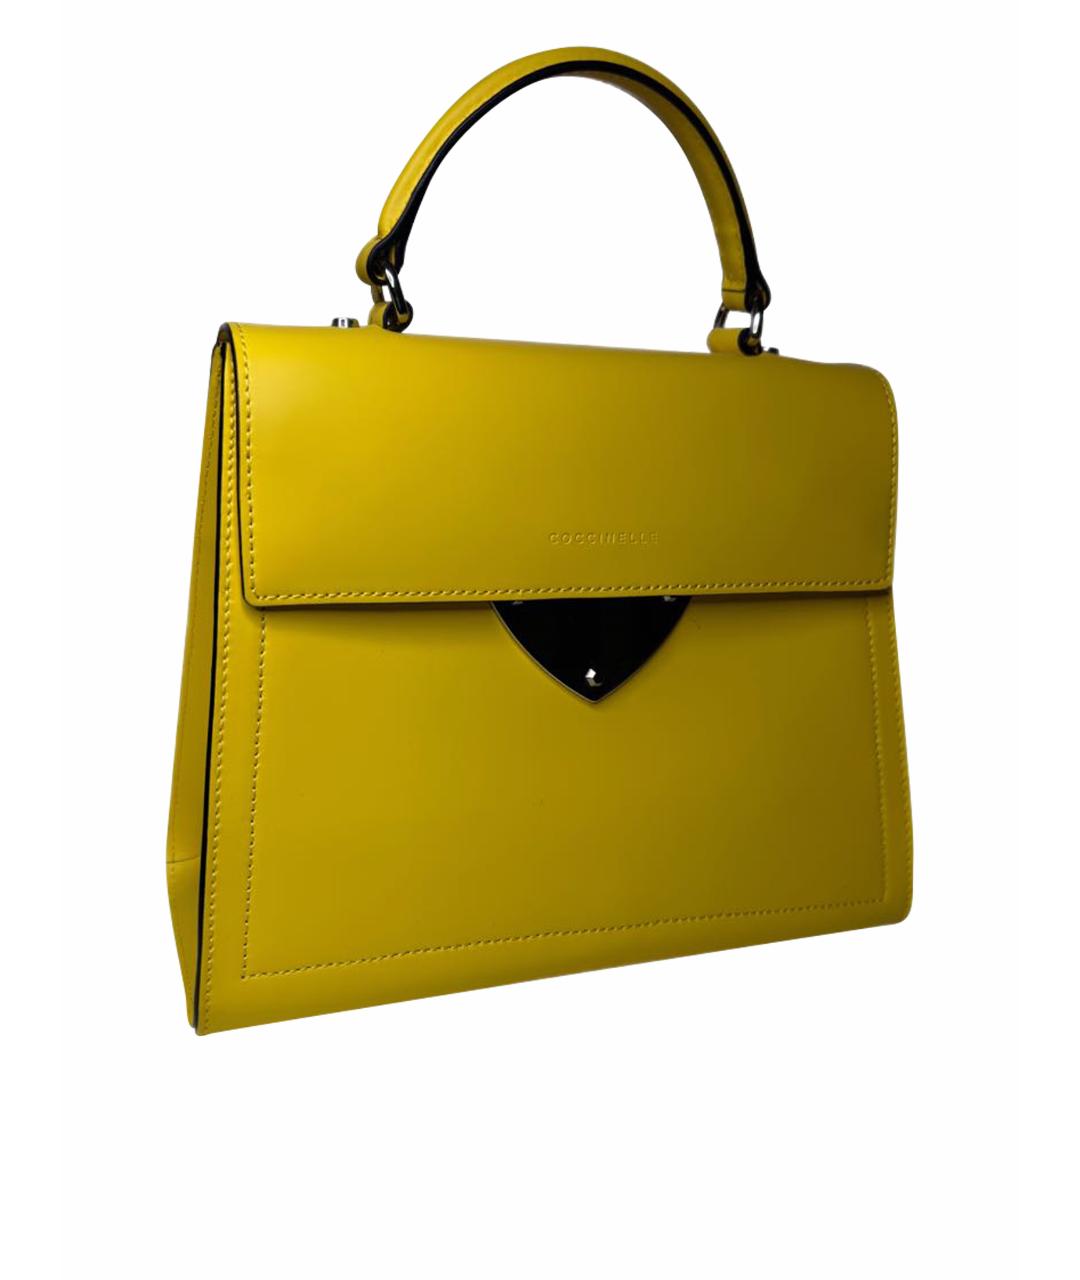 COCCINELLE Желтая кожаная сумка с короткими ручками, фото 1